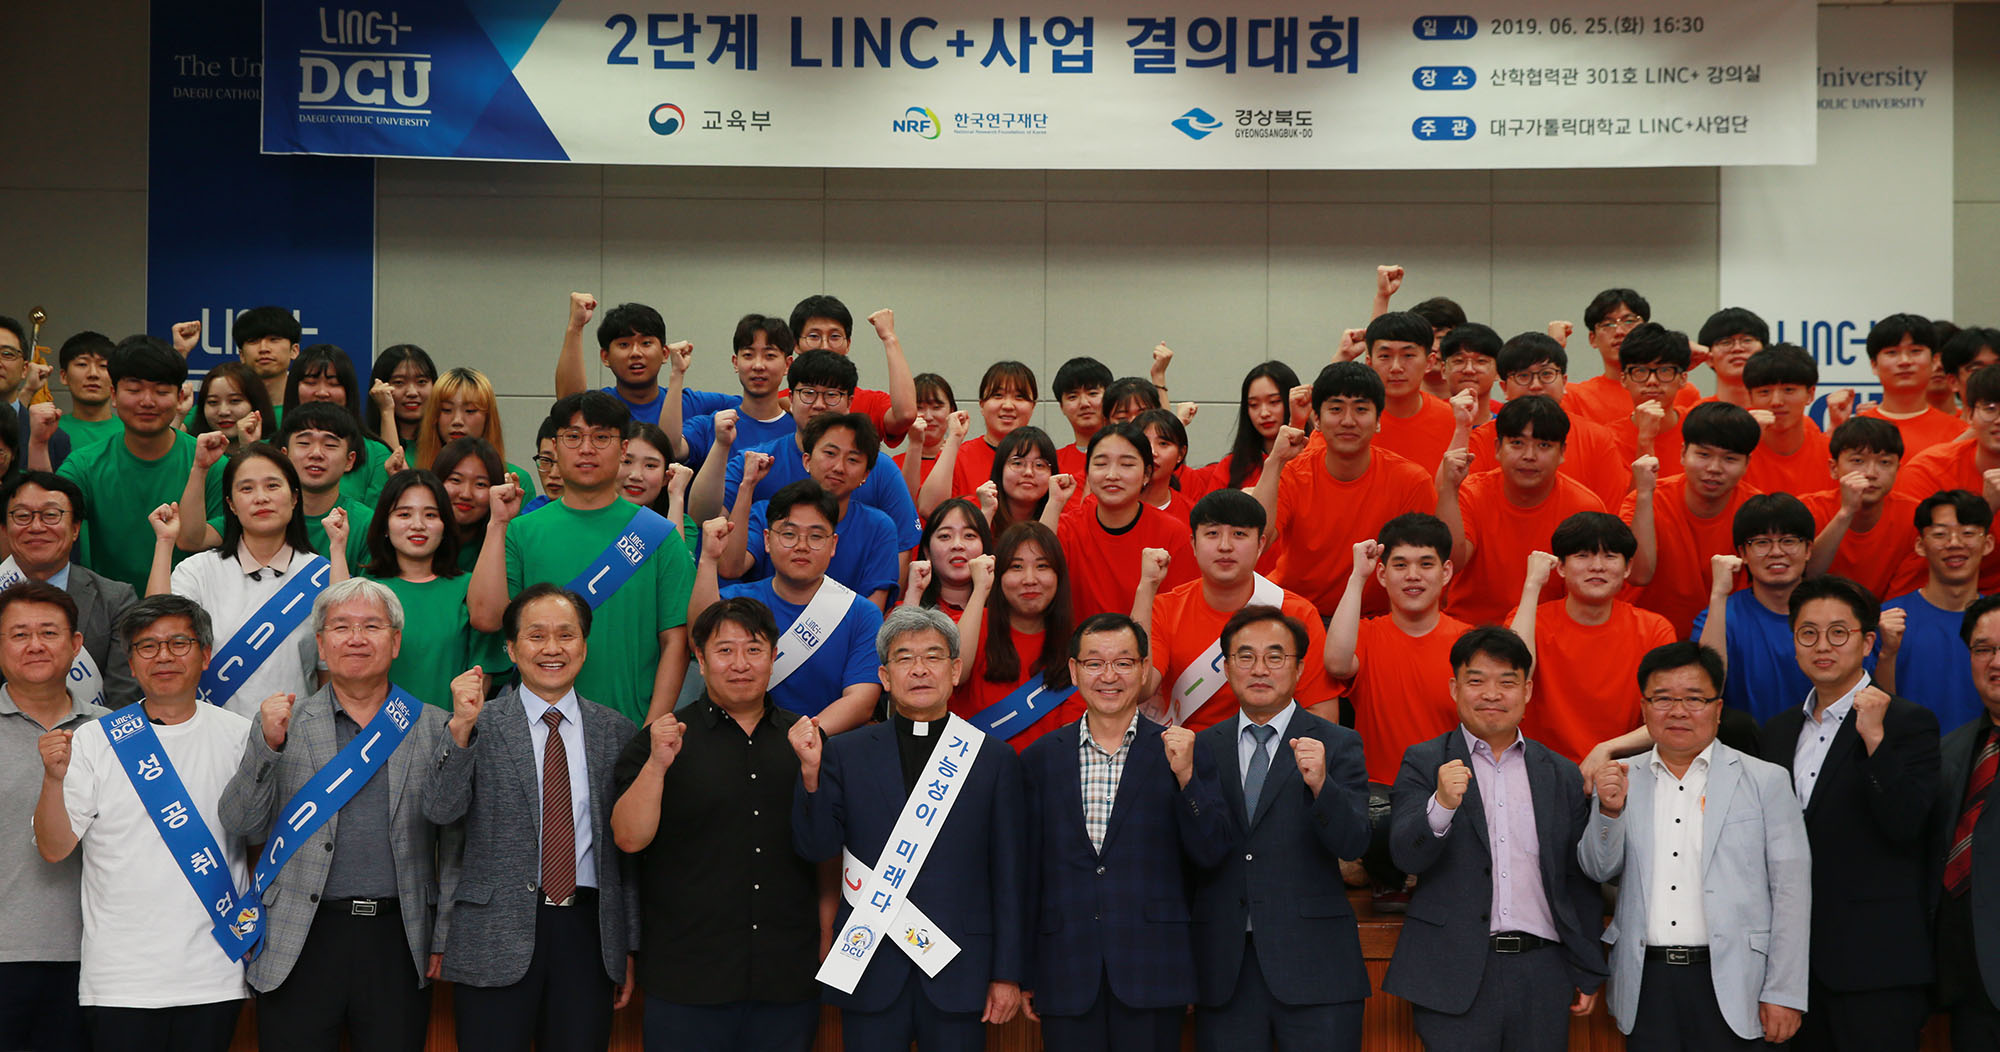 LINC+로 산학협력 혁신을!...2단계 LINC+사업 결의대회